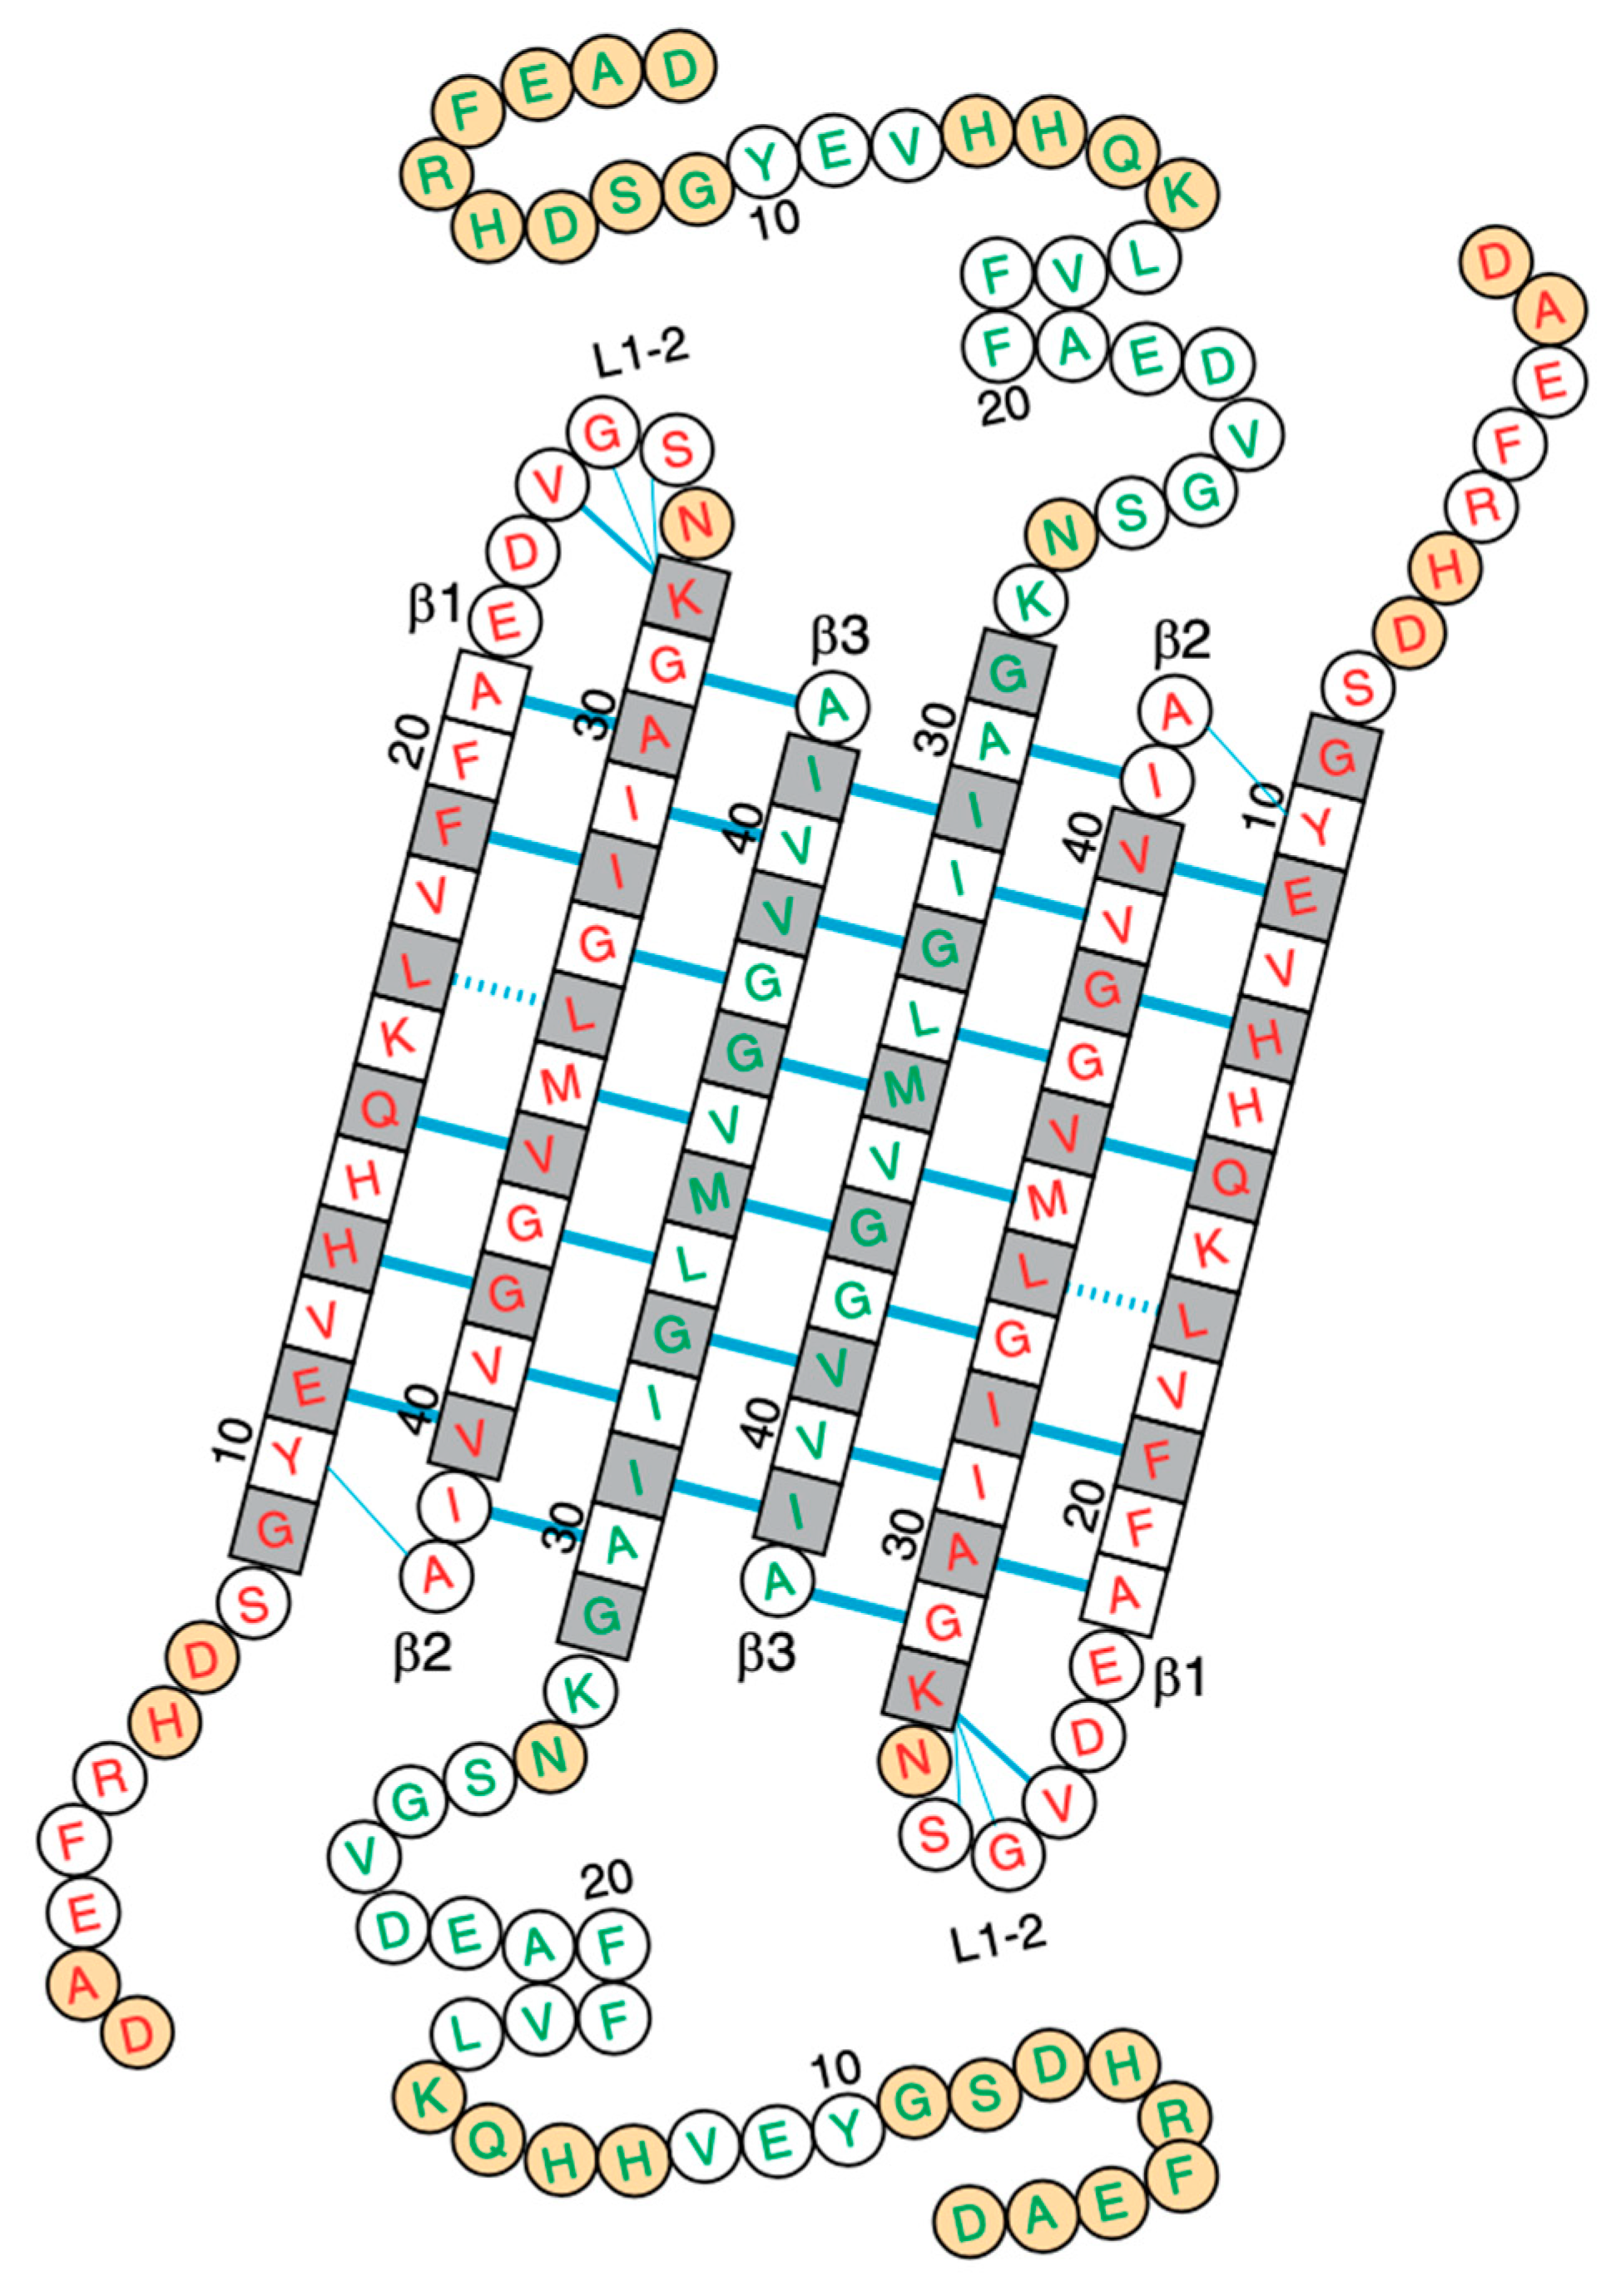 Aβ(1-42) tetramer and octamer structures reveal edge conductivity